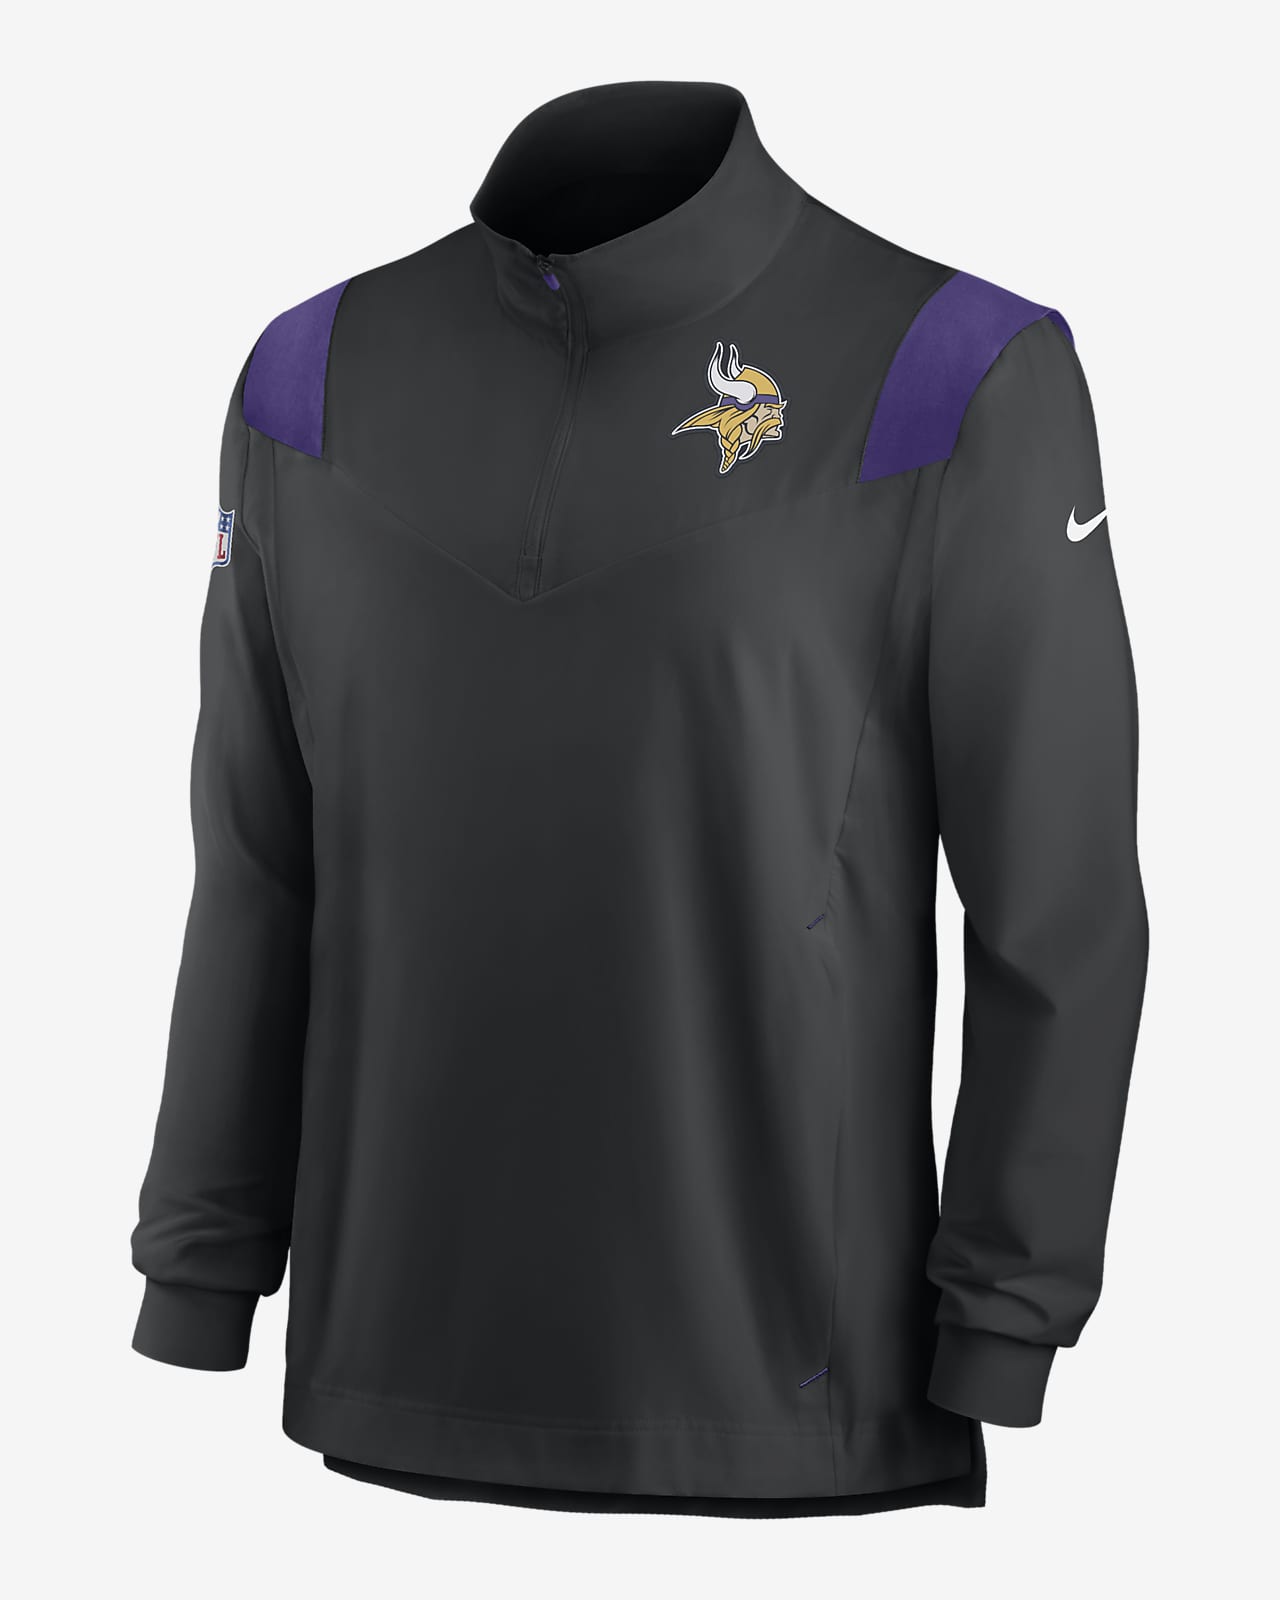 Nike Repel Coach (NFL Minnesota Vikings) Men's 1/4-Zip Jacket